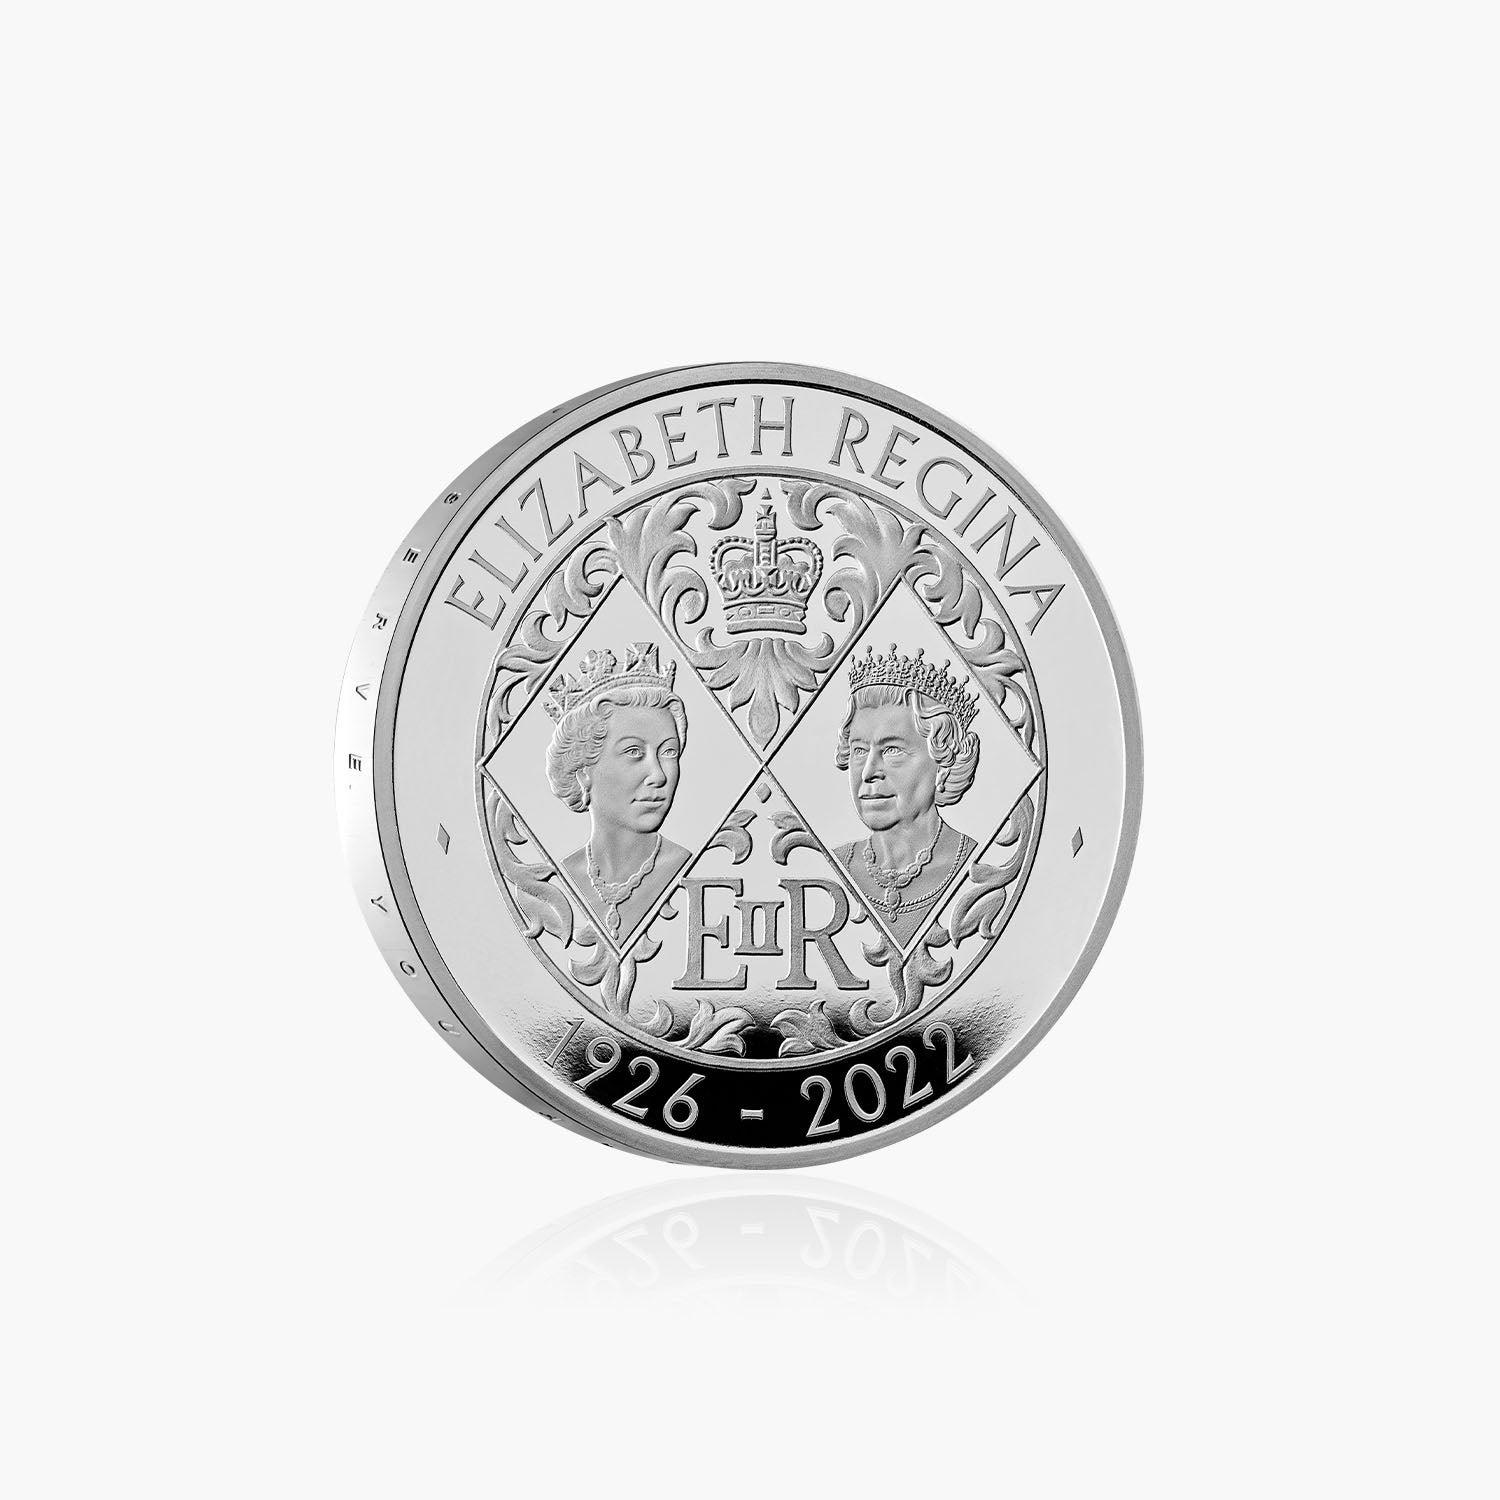 Her Majesty Queen Elizabeth II 2022 £5 Silver Piedfort Coin - King Charles III first portrait